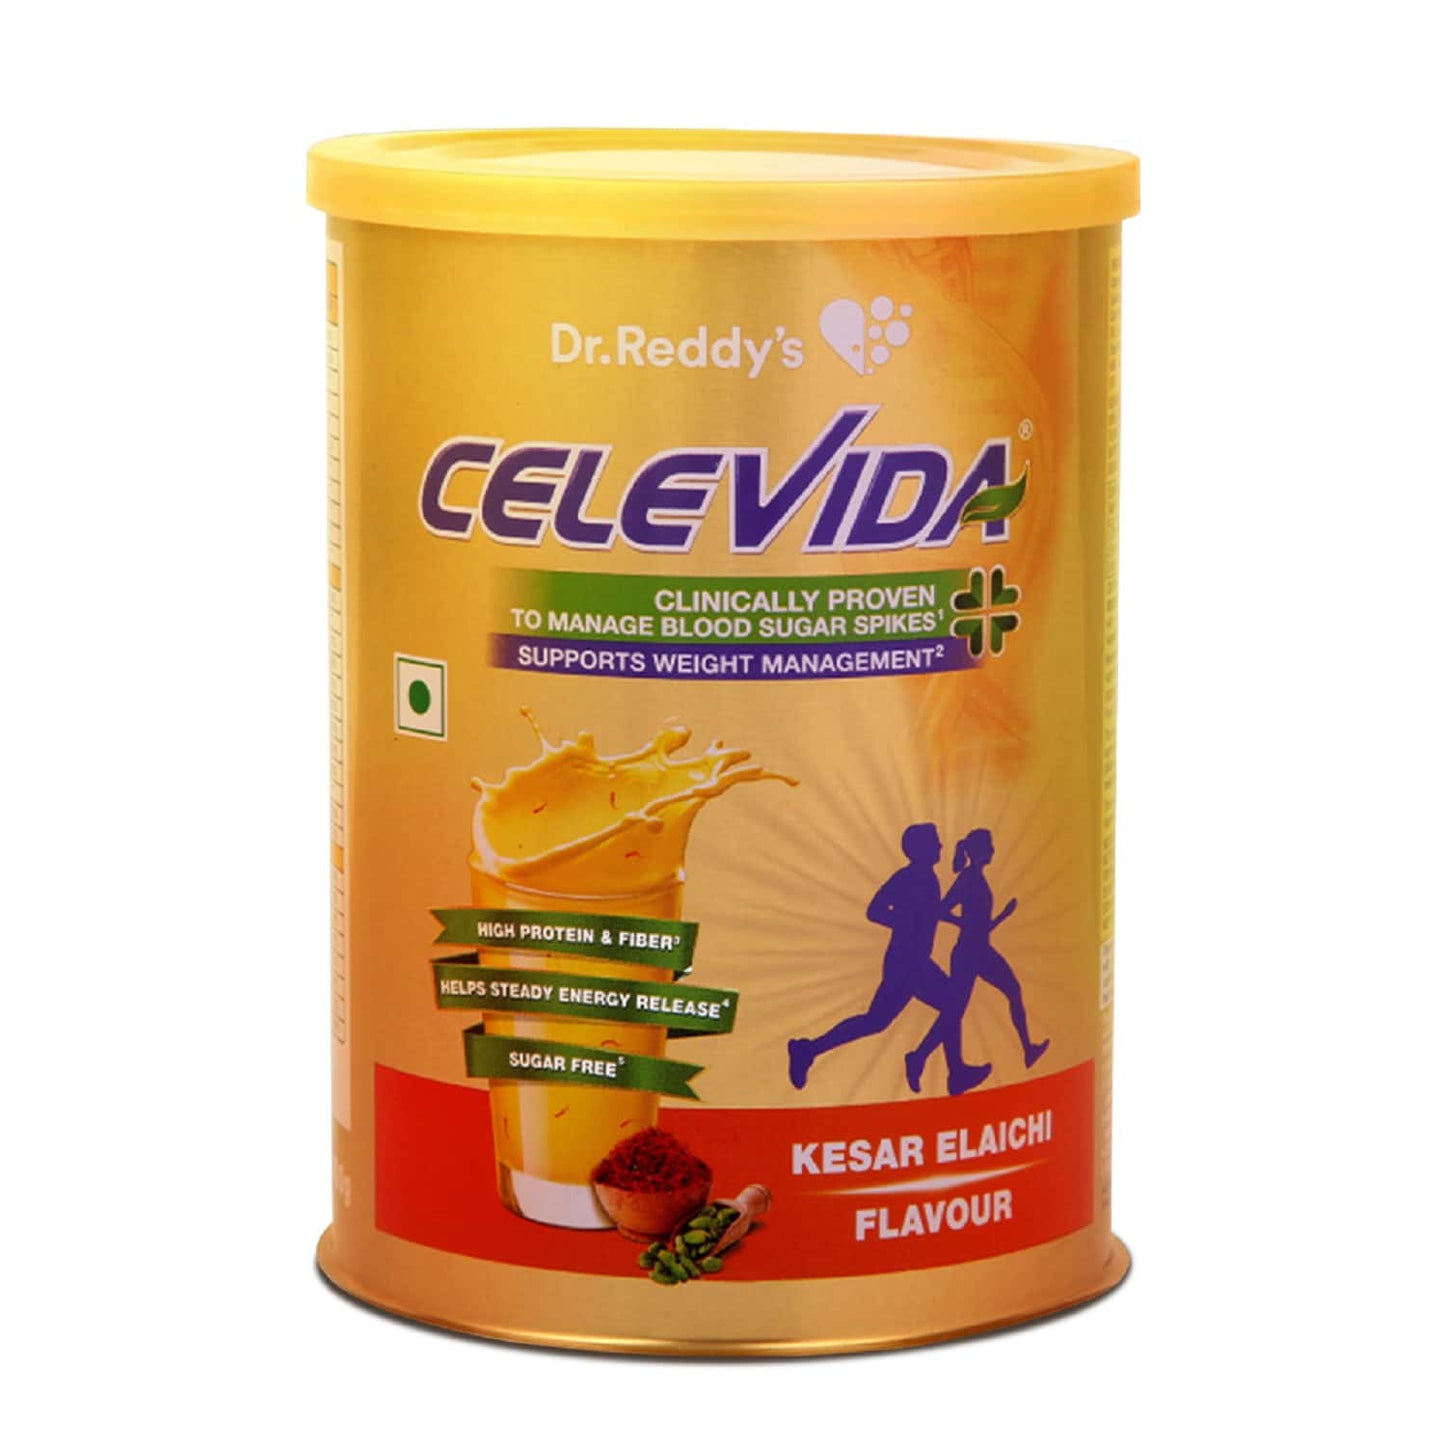 Celevida Nutritional Powder - Kesar Elaichi, 200gm